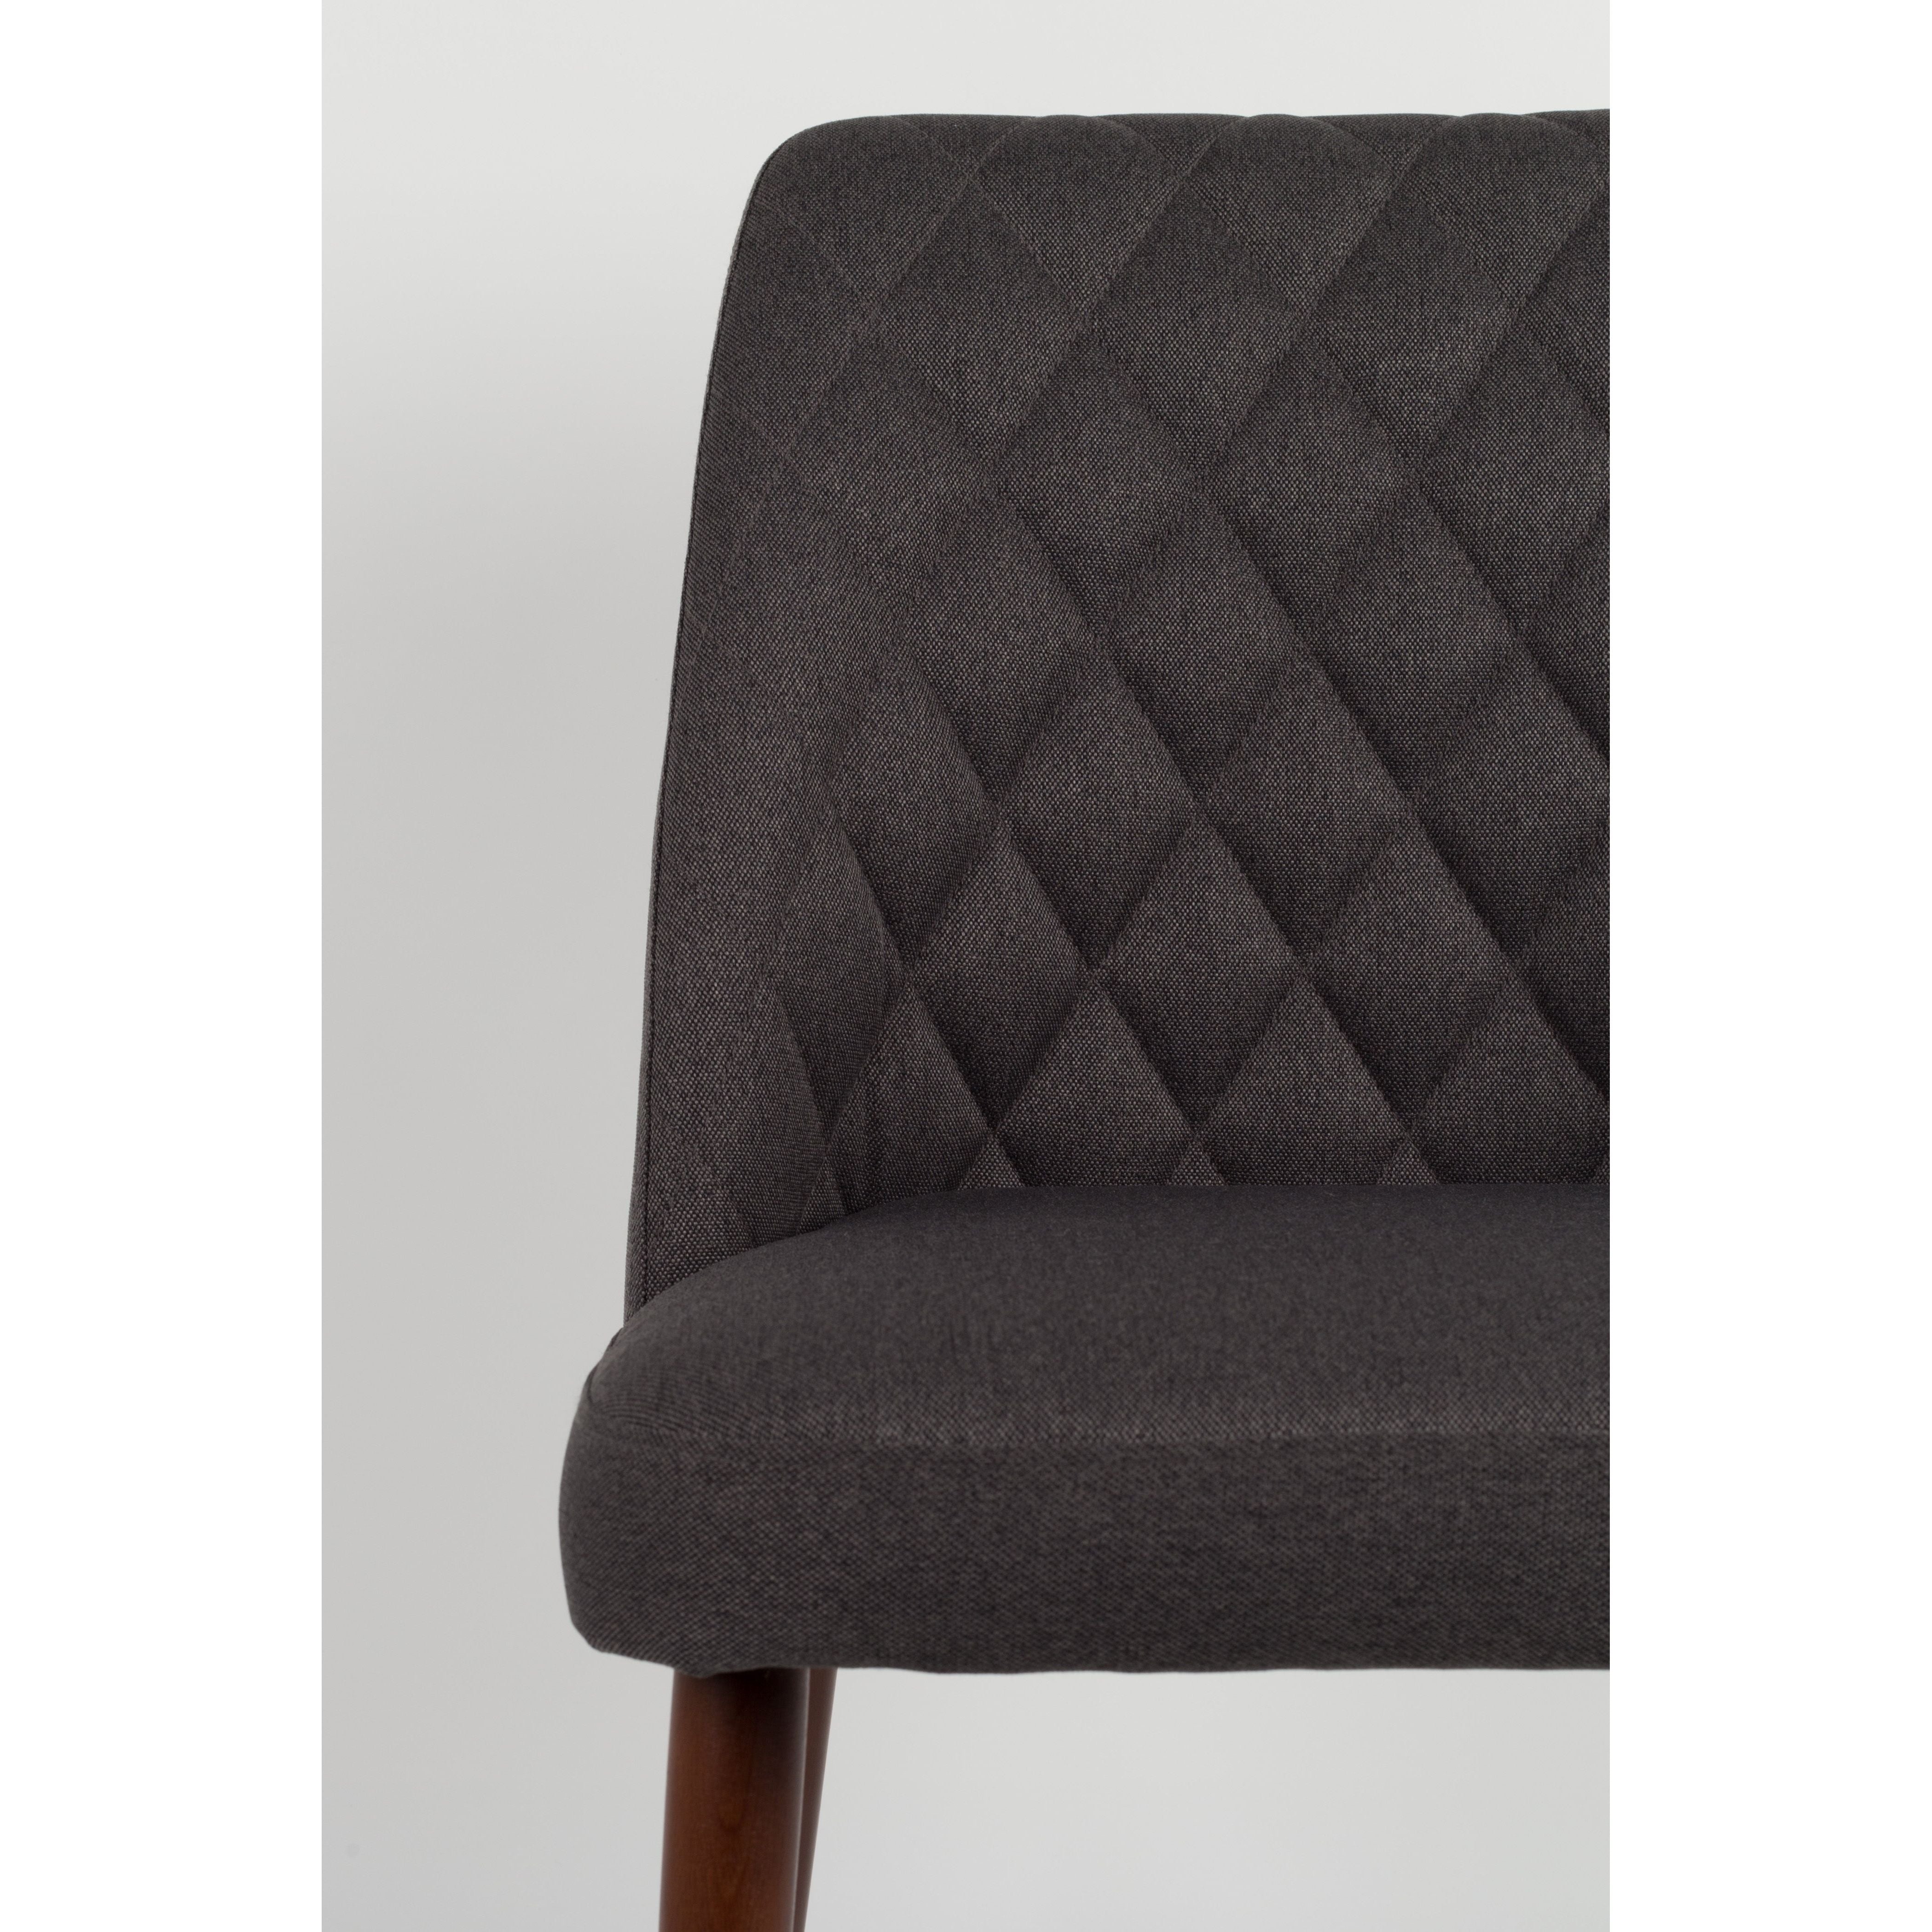 Chair conway dark gray | 2 pieces